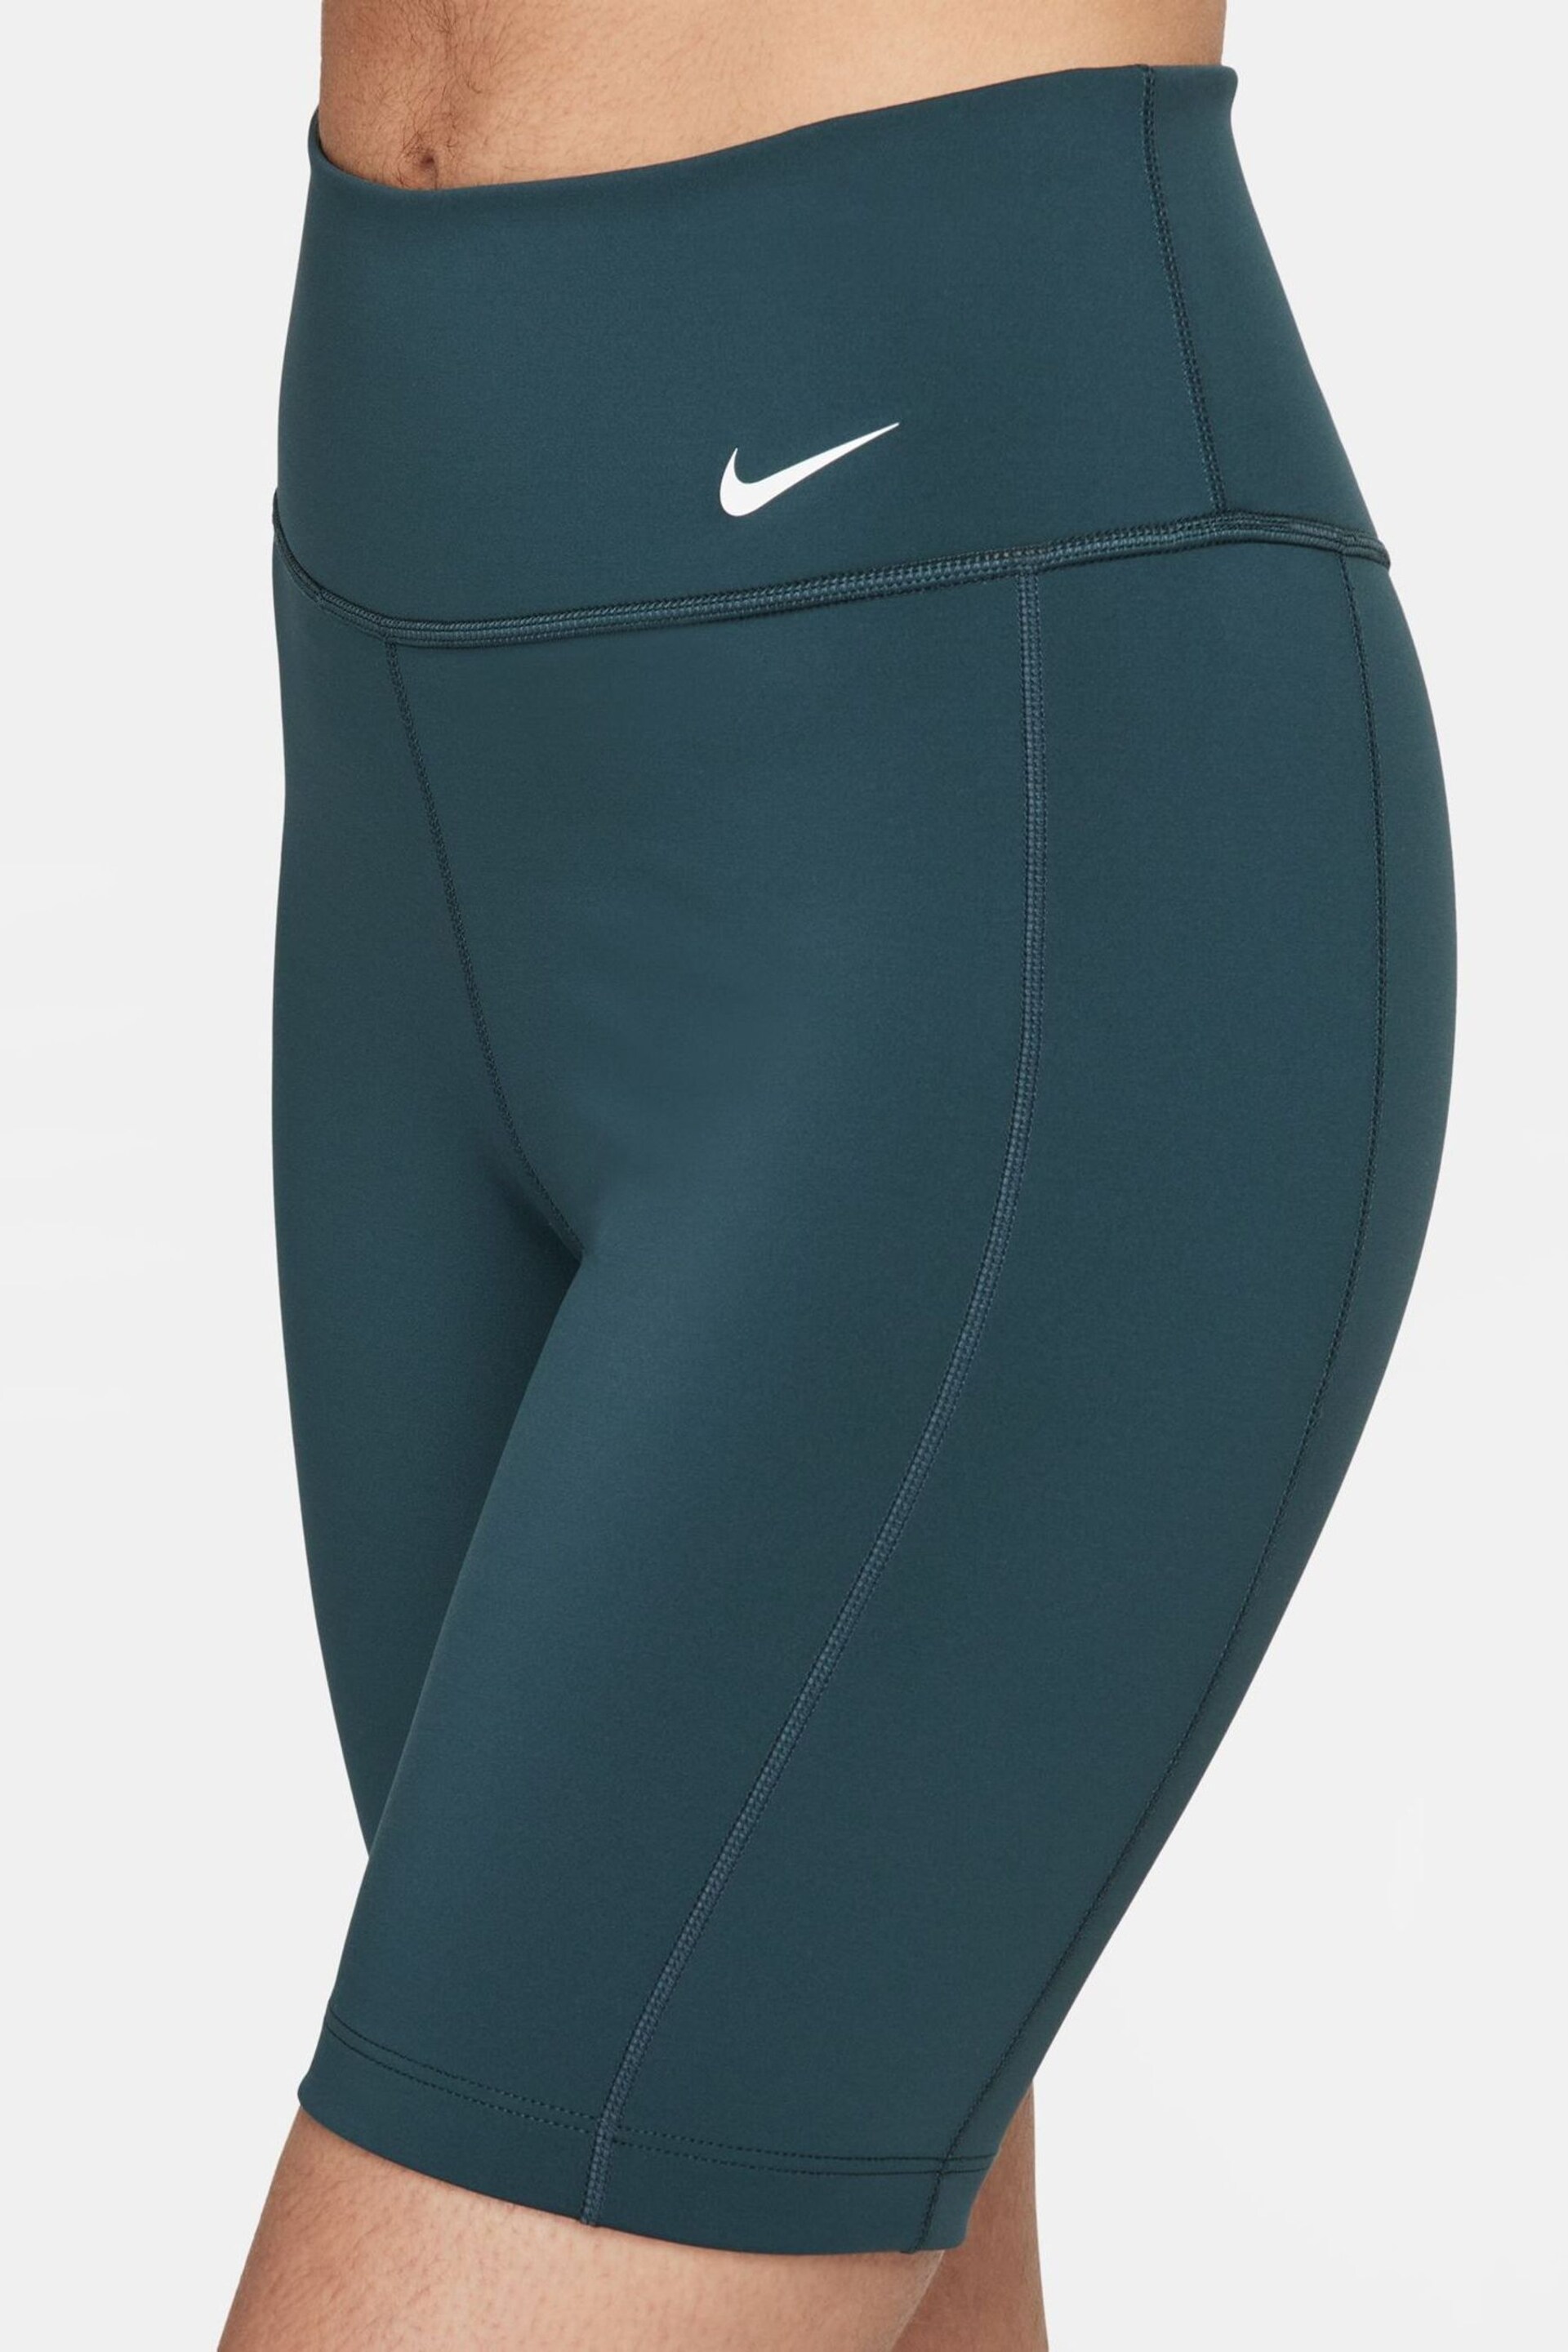 Nike Green Leak Protection Mid Rise 7 Biker Shorts - Image 4 of 8